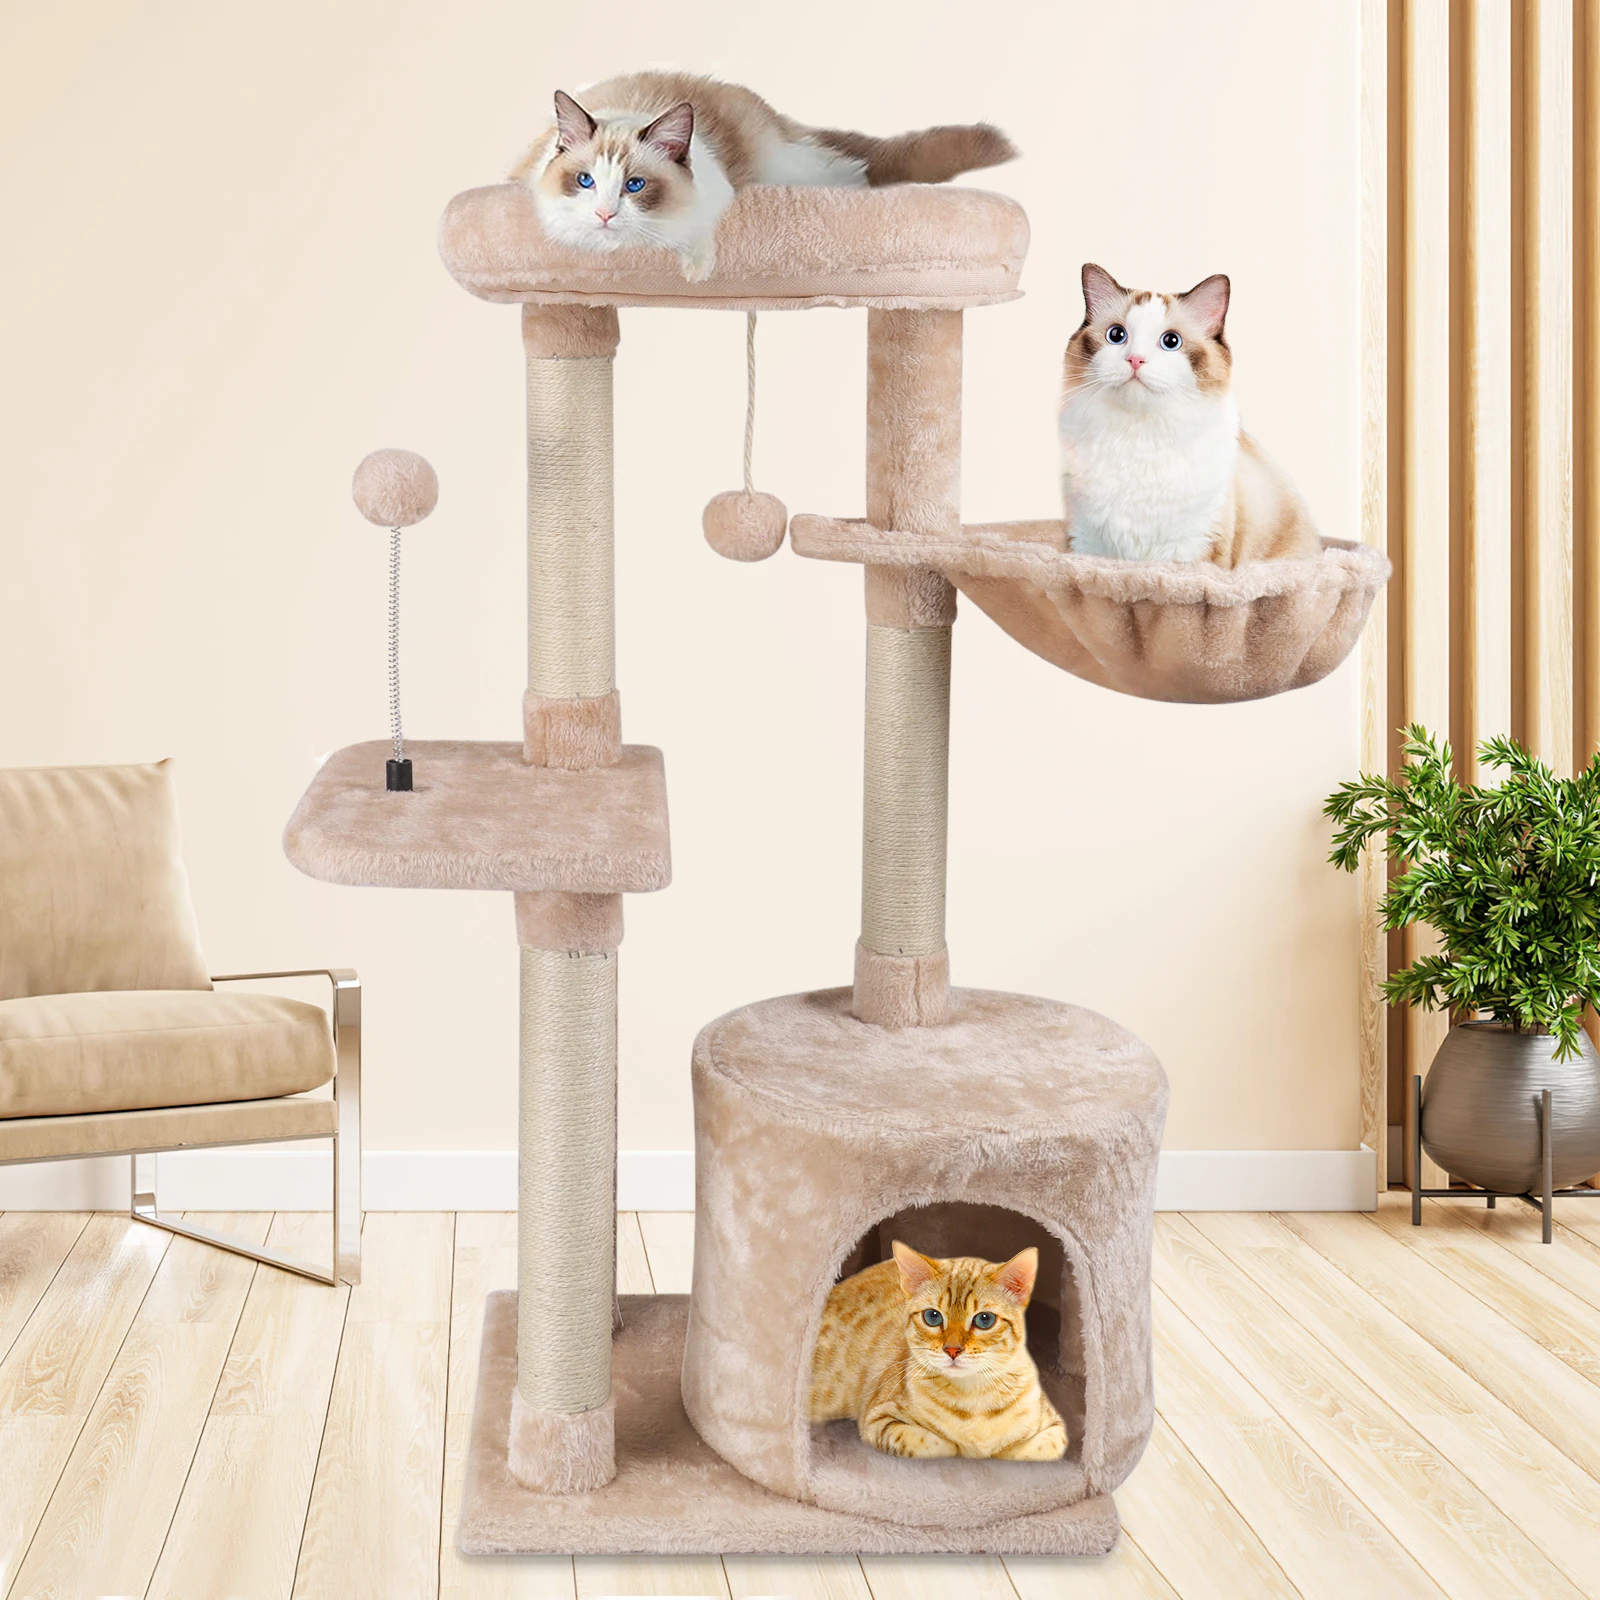 Torre de escalada de varios niveles para gatos, árbol para rascar, juguete para gatos con muebles para el hogar, entretenimiento